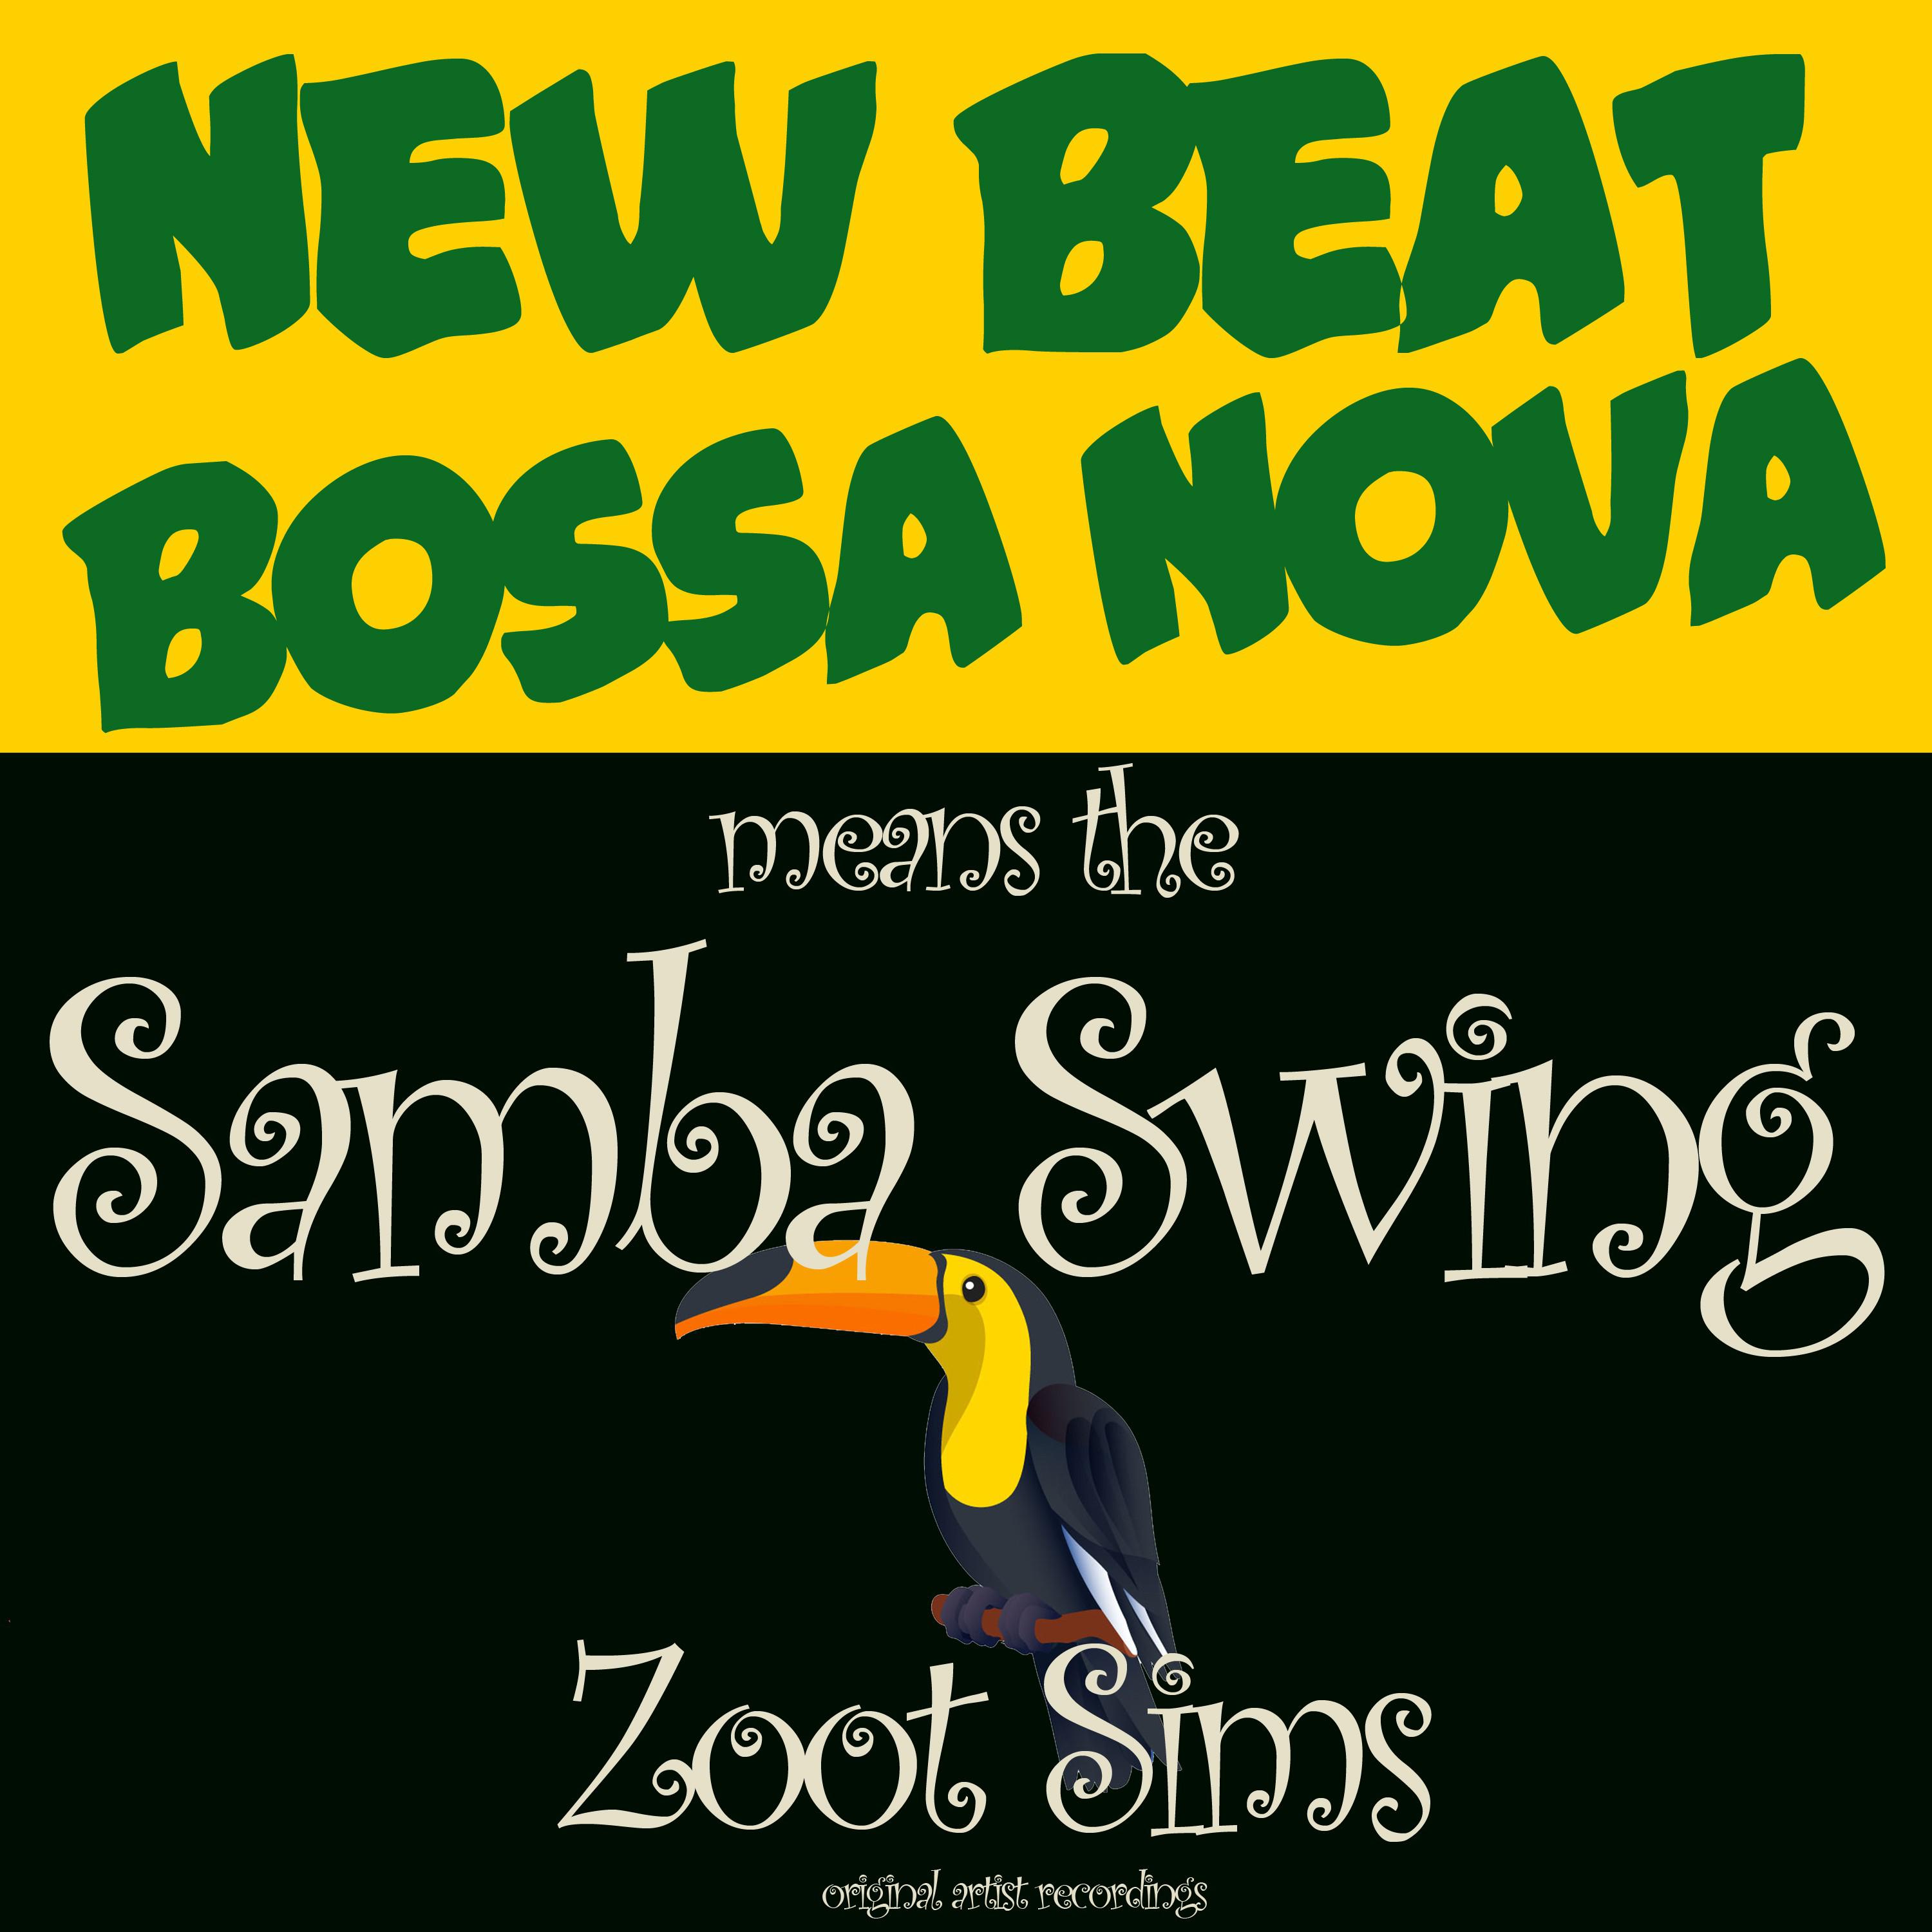 New Beat Bossa Nova Means the Samba Swings